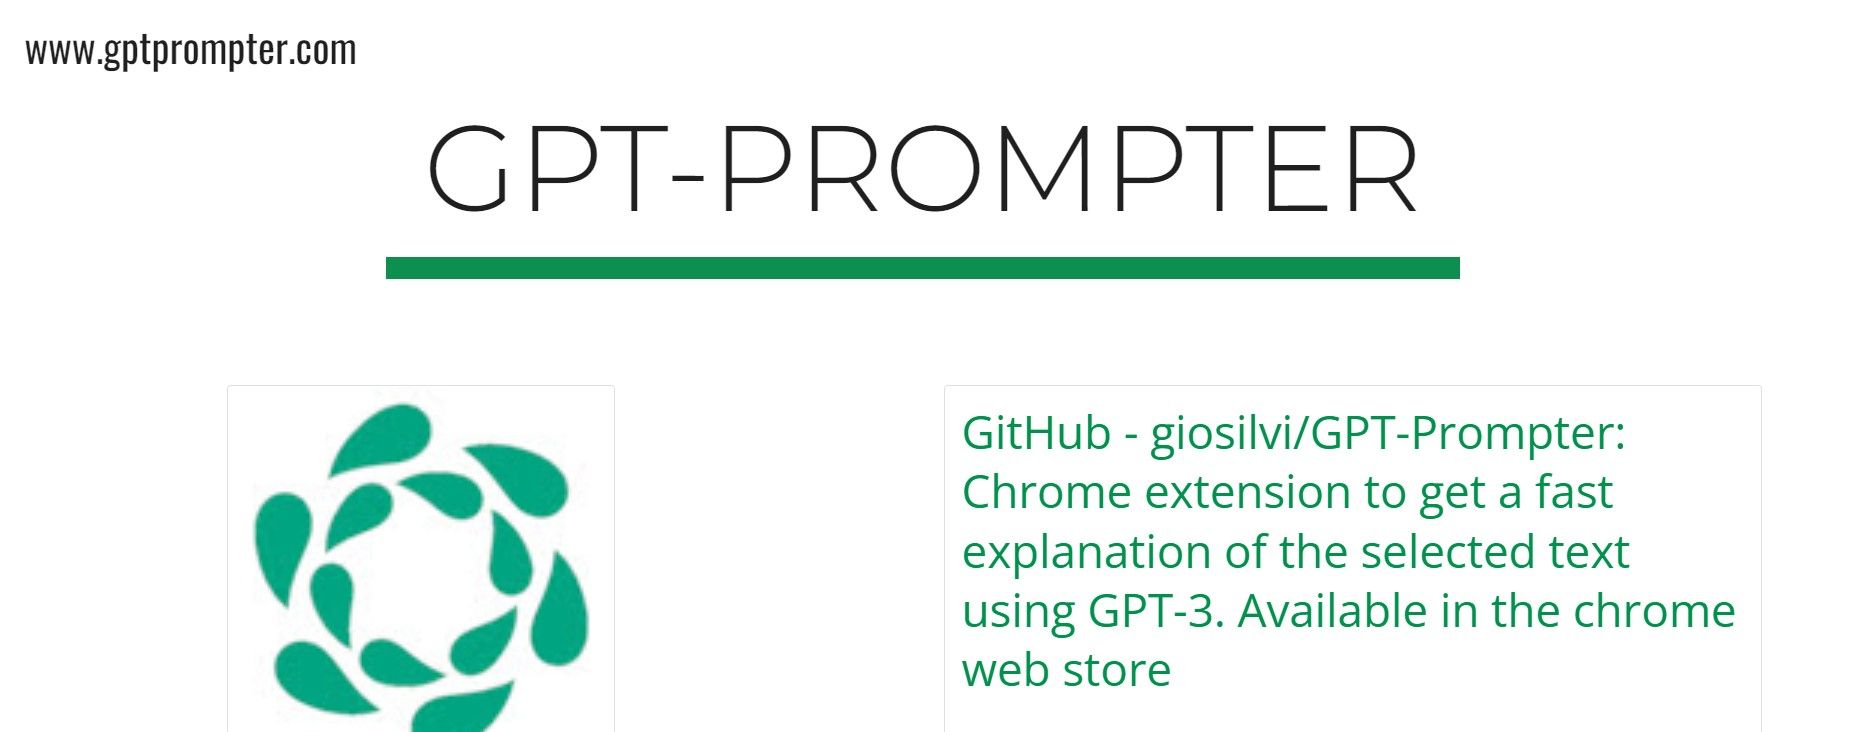 Post: GPT-Prompter